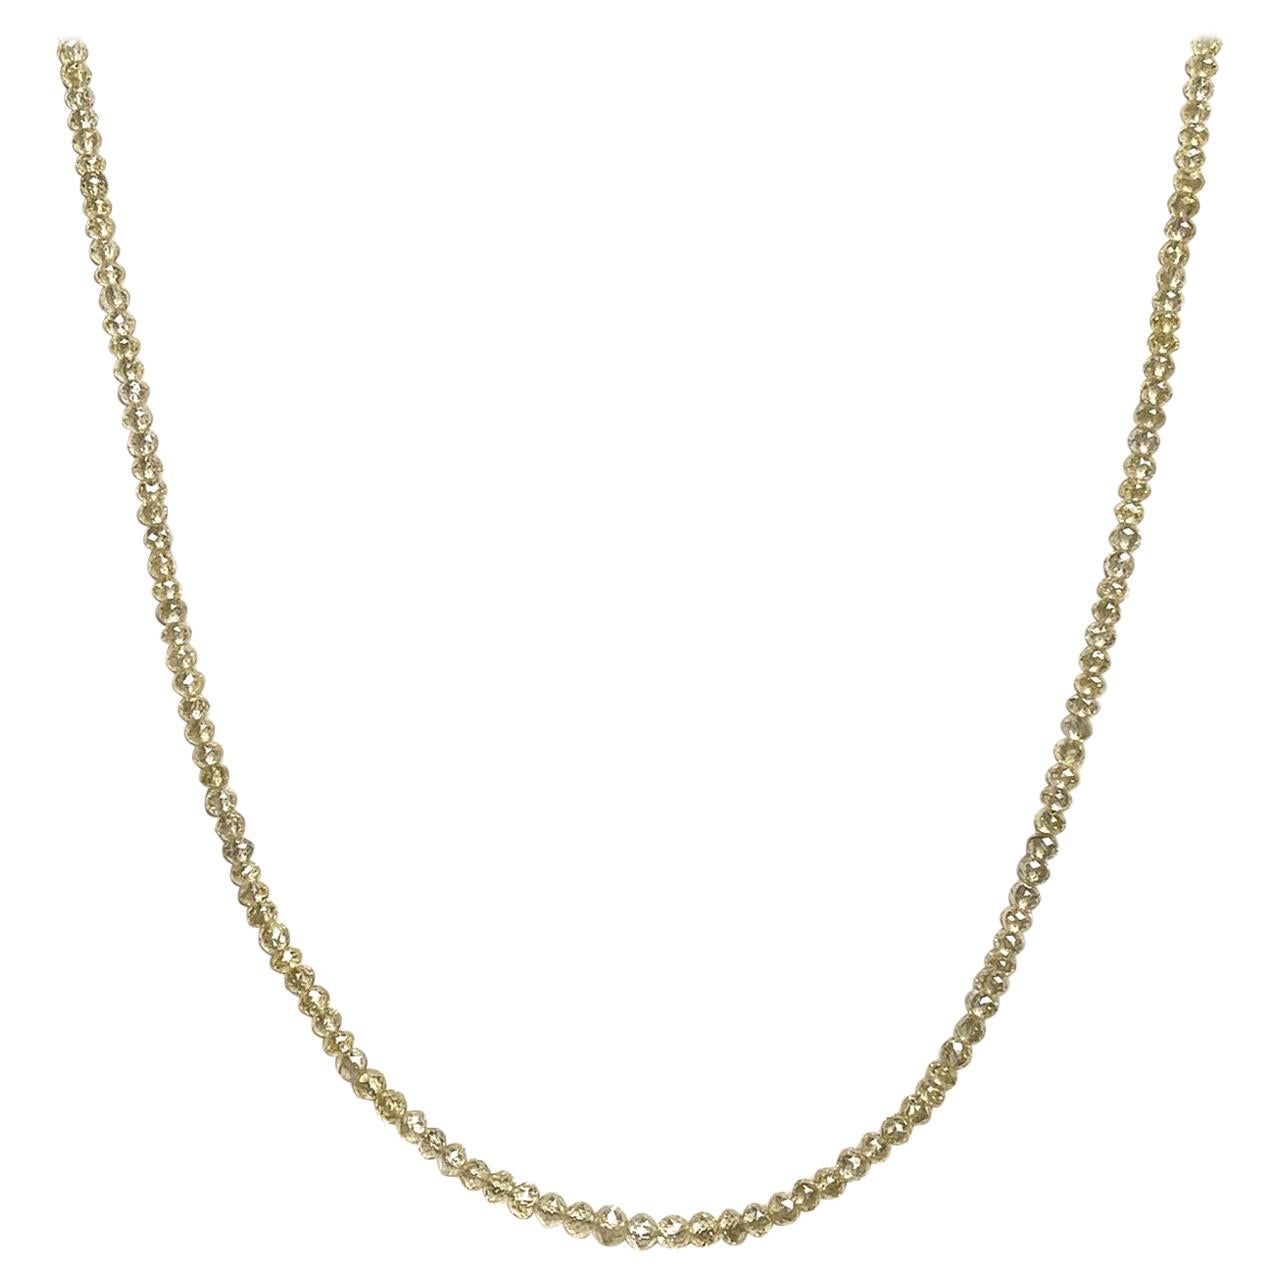 23.83 Carat Yellow Diamond Necklace with a White Diamond Clasp